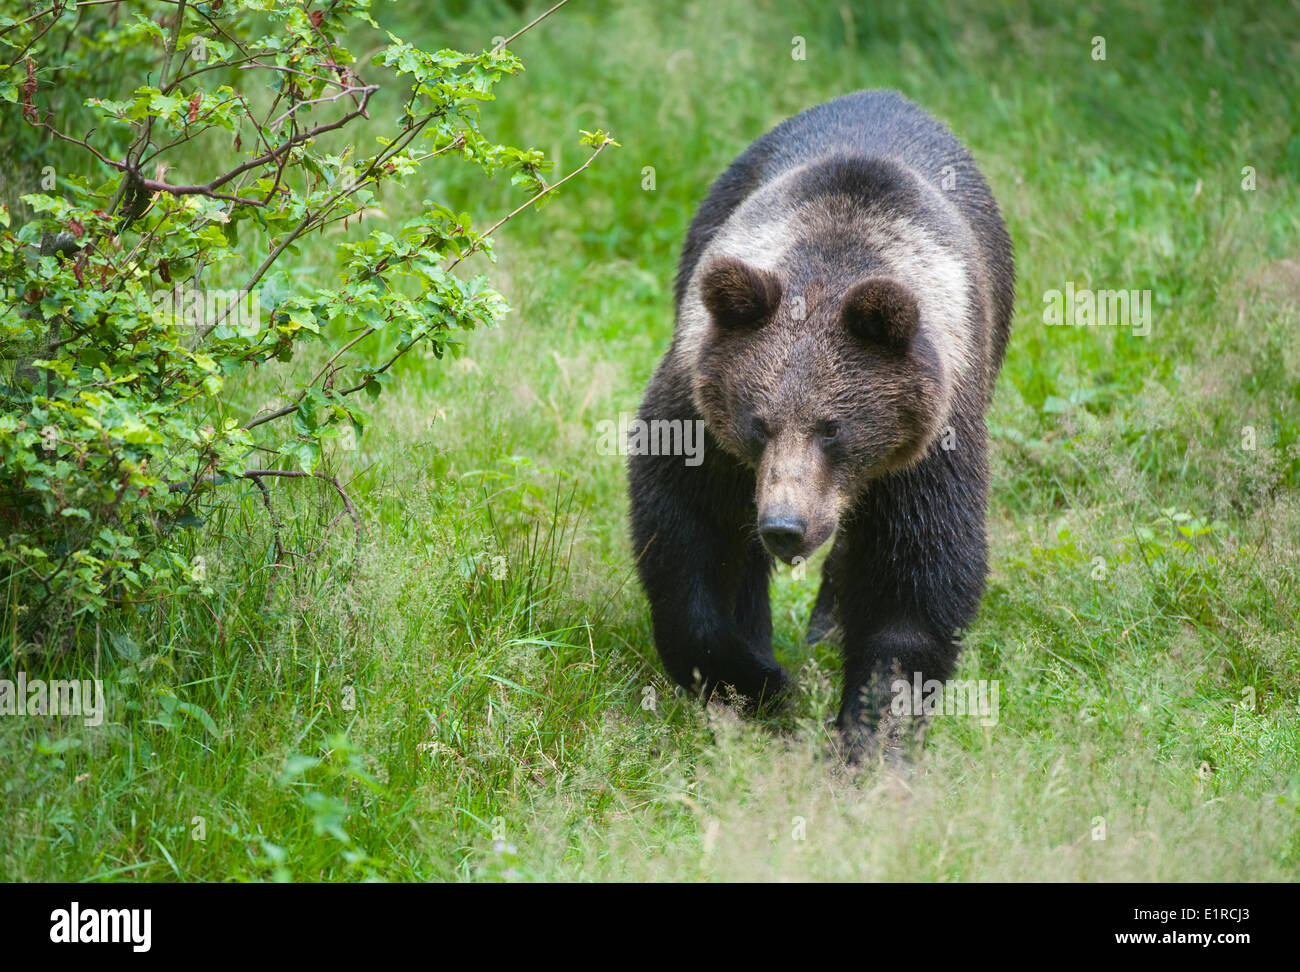 Young European brown bear in habitat Stock Photo